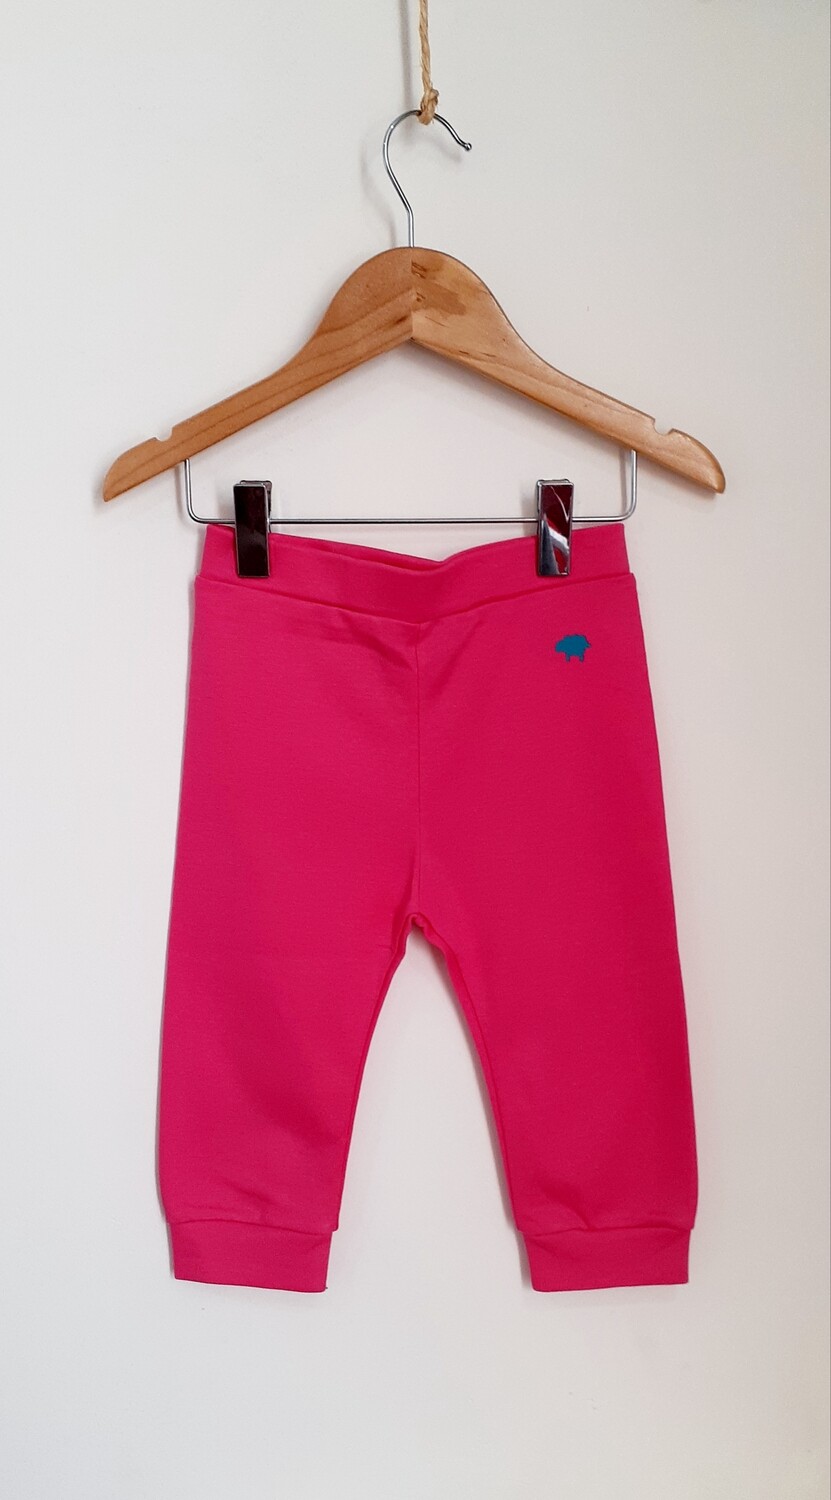 Pantalon de Algodon Fandango Pink Talla 18 a 24 Meses